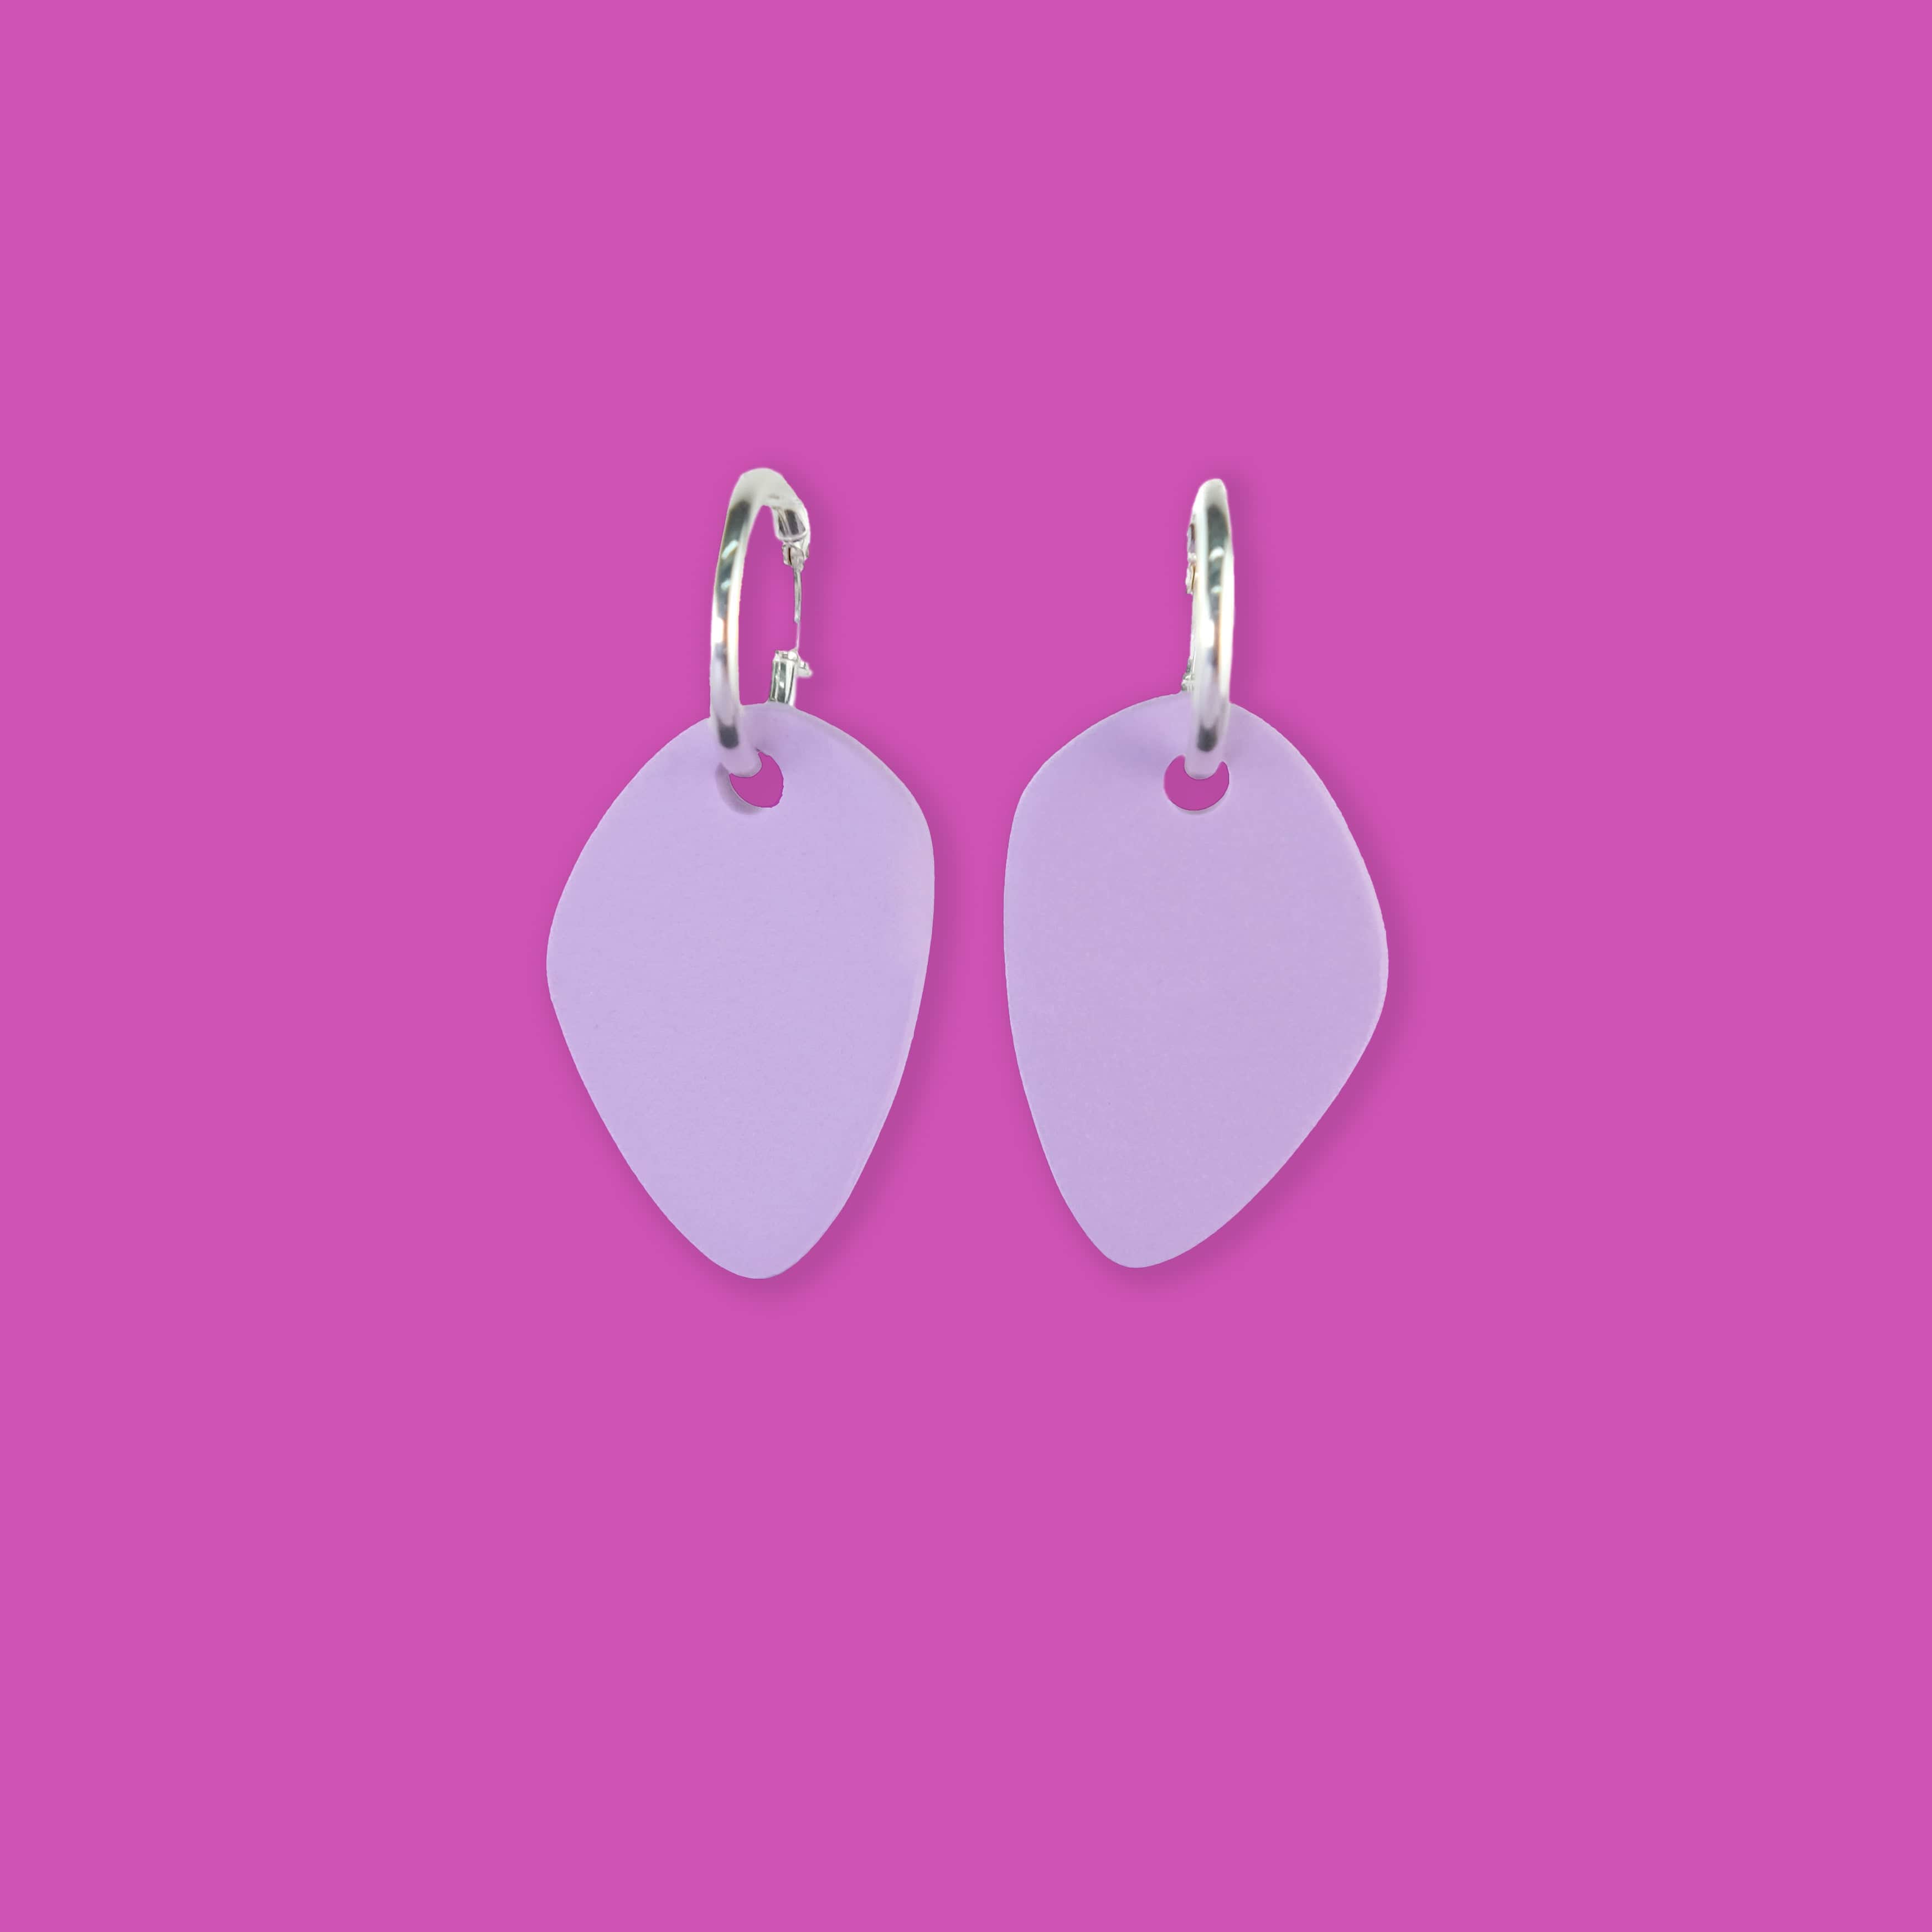 Organic shapes, hoop charm dangly earrings Calder inspired in lavender #color_lavender